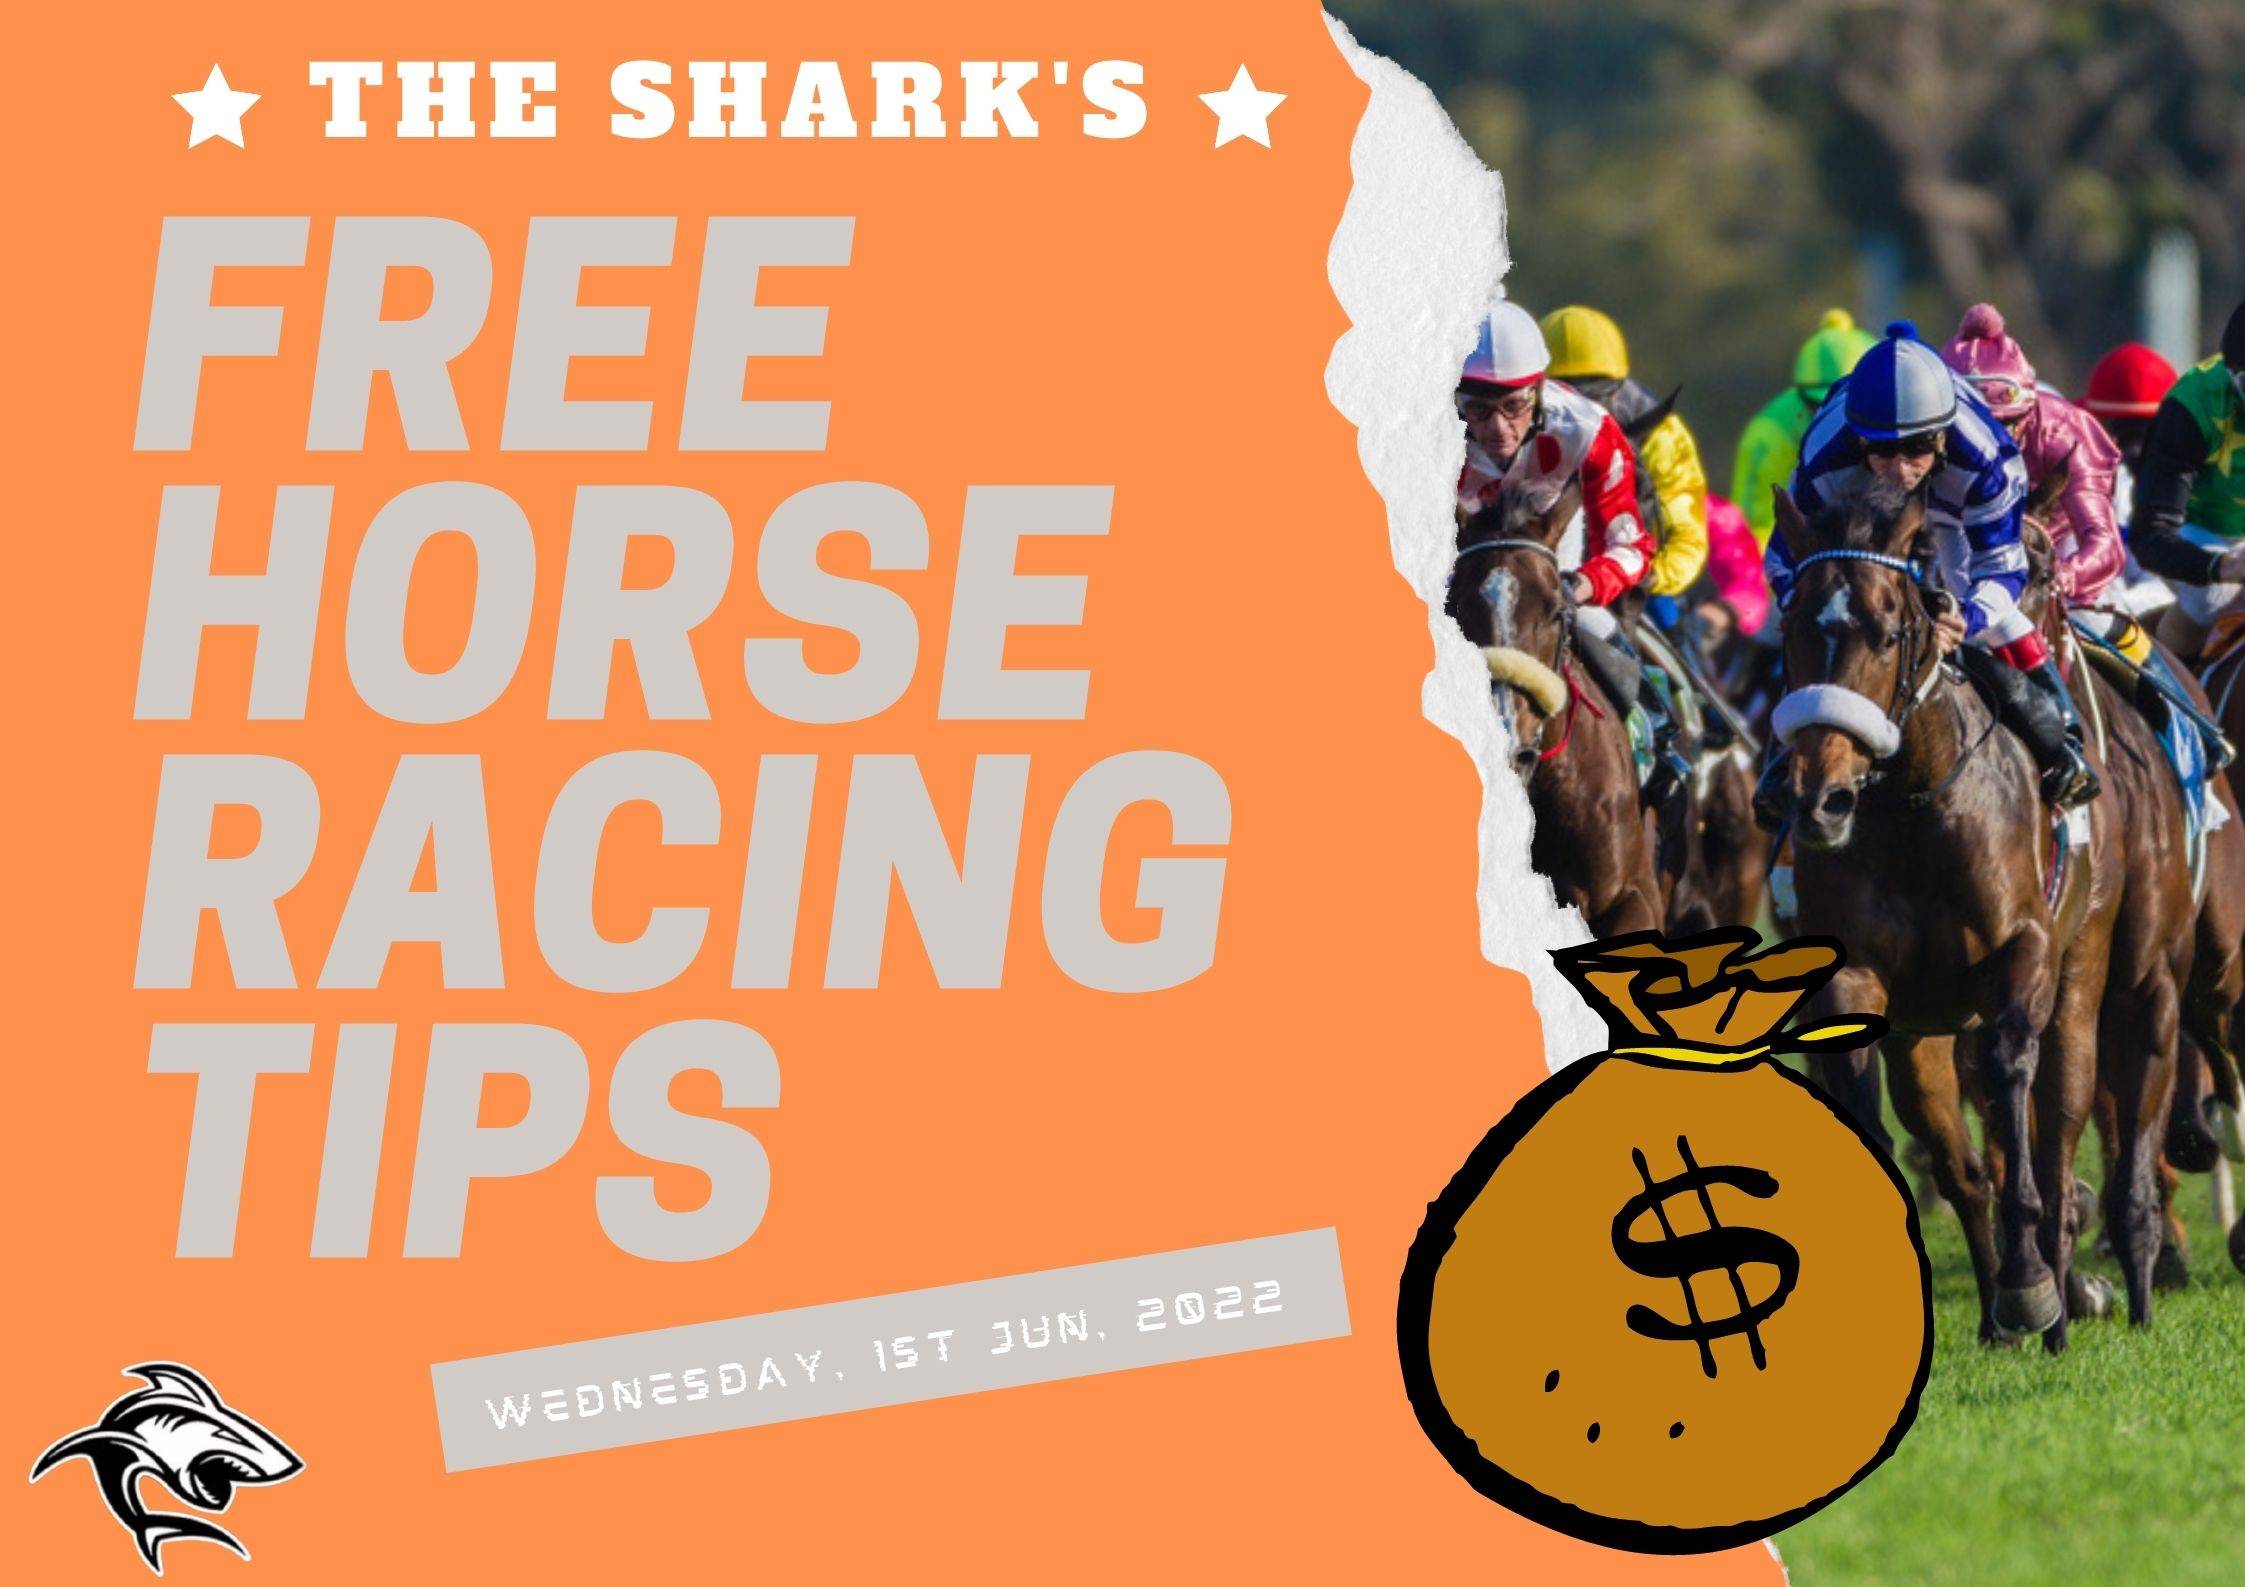 Free Horse Racing Tips - 1st Jun